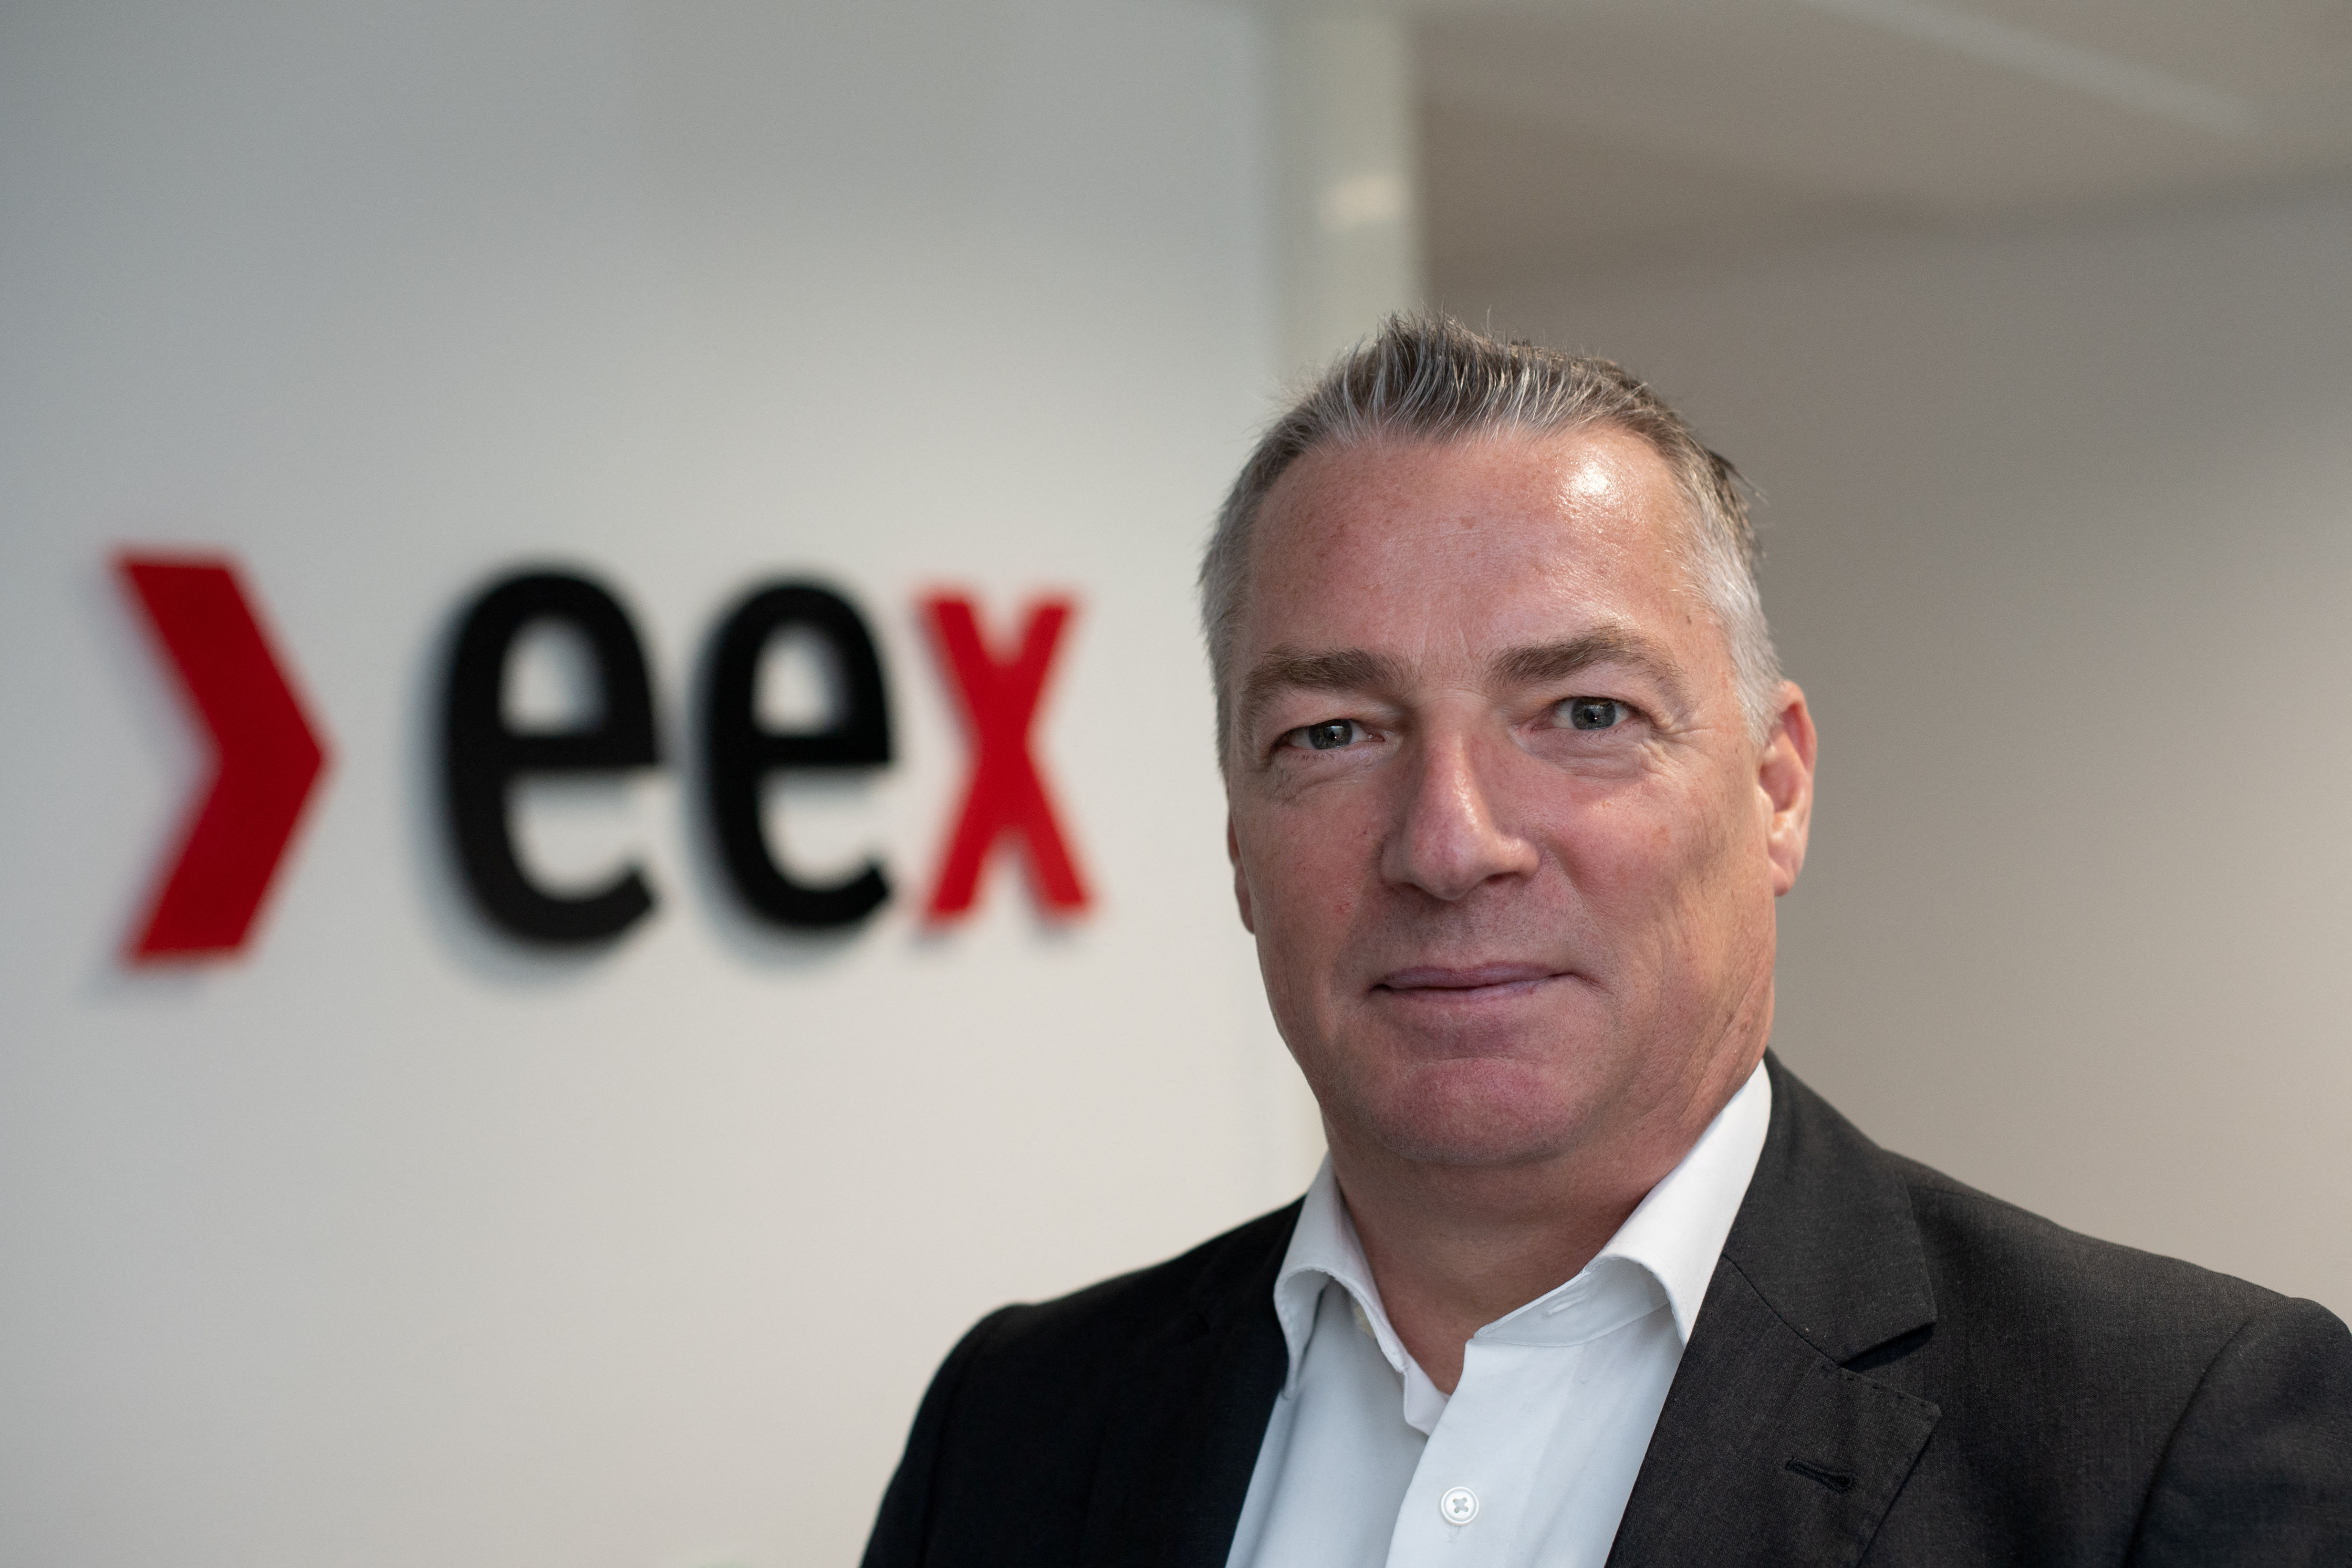 European Energy Exchange (EEX) CEO Peter Reitz